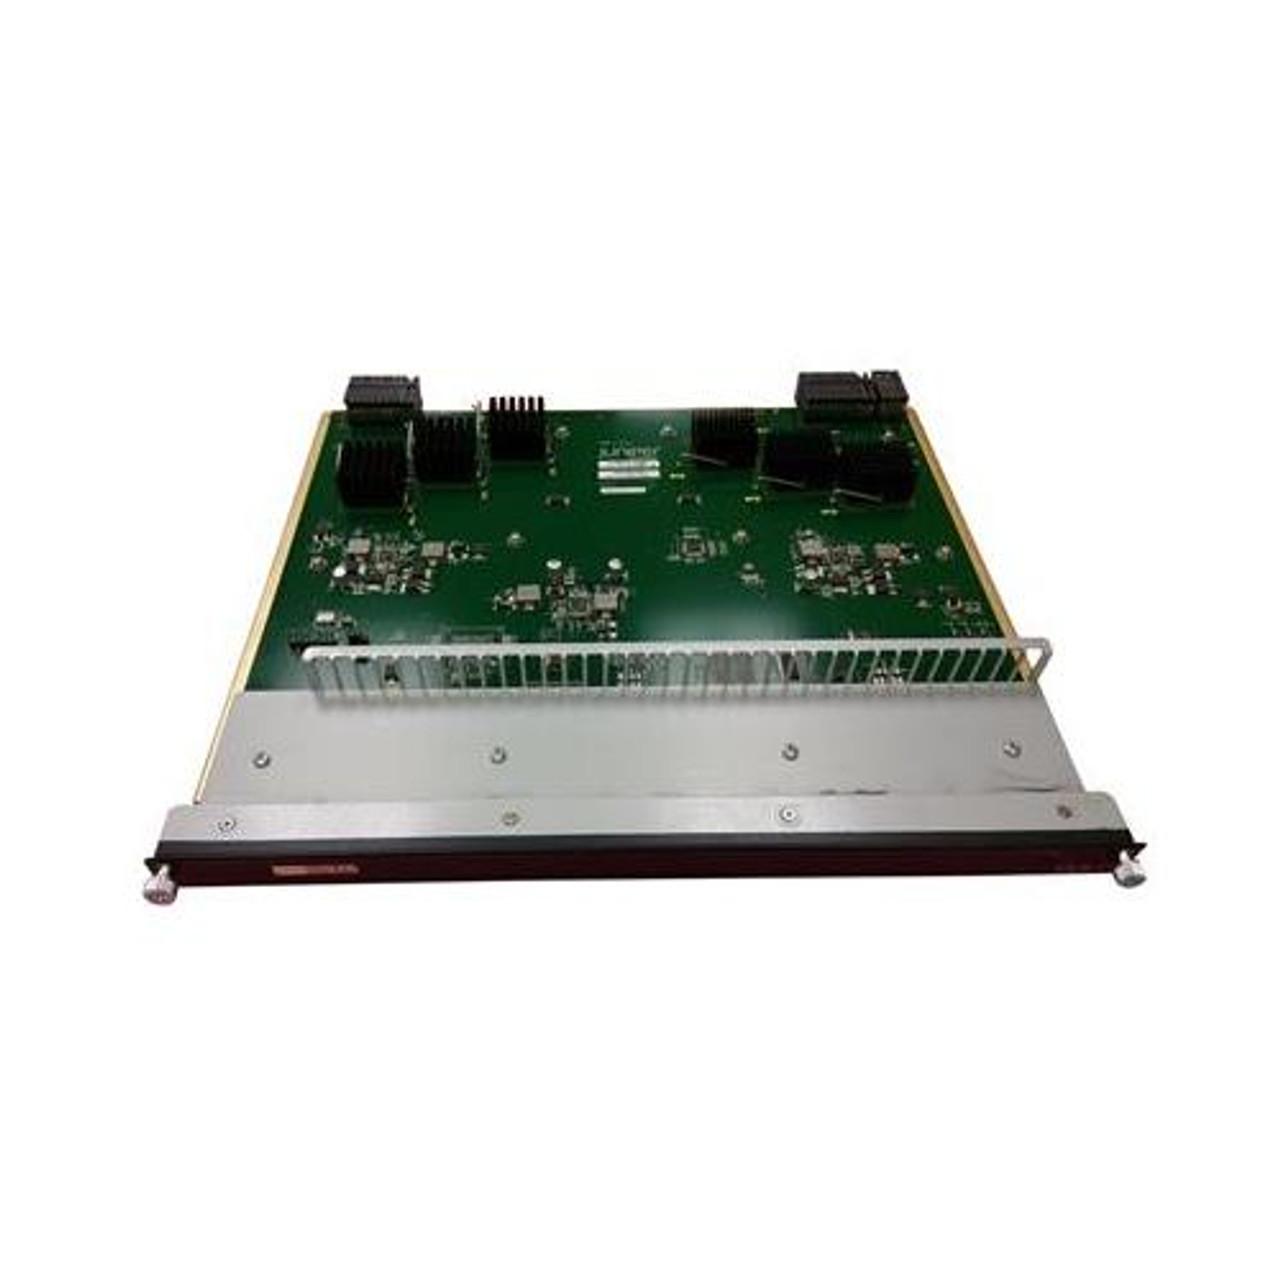 STM10C3ATM2MMF Juniper Circuit Card (Refurbished)